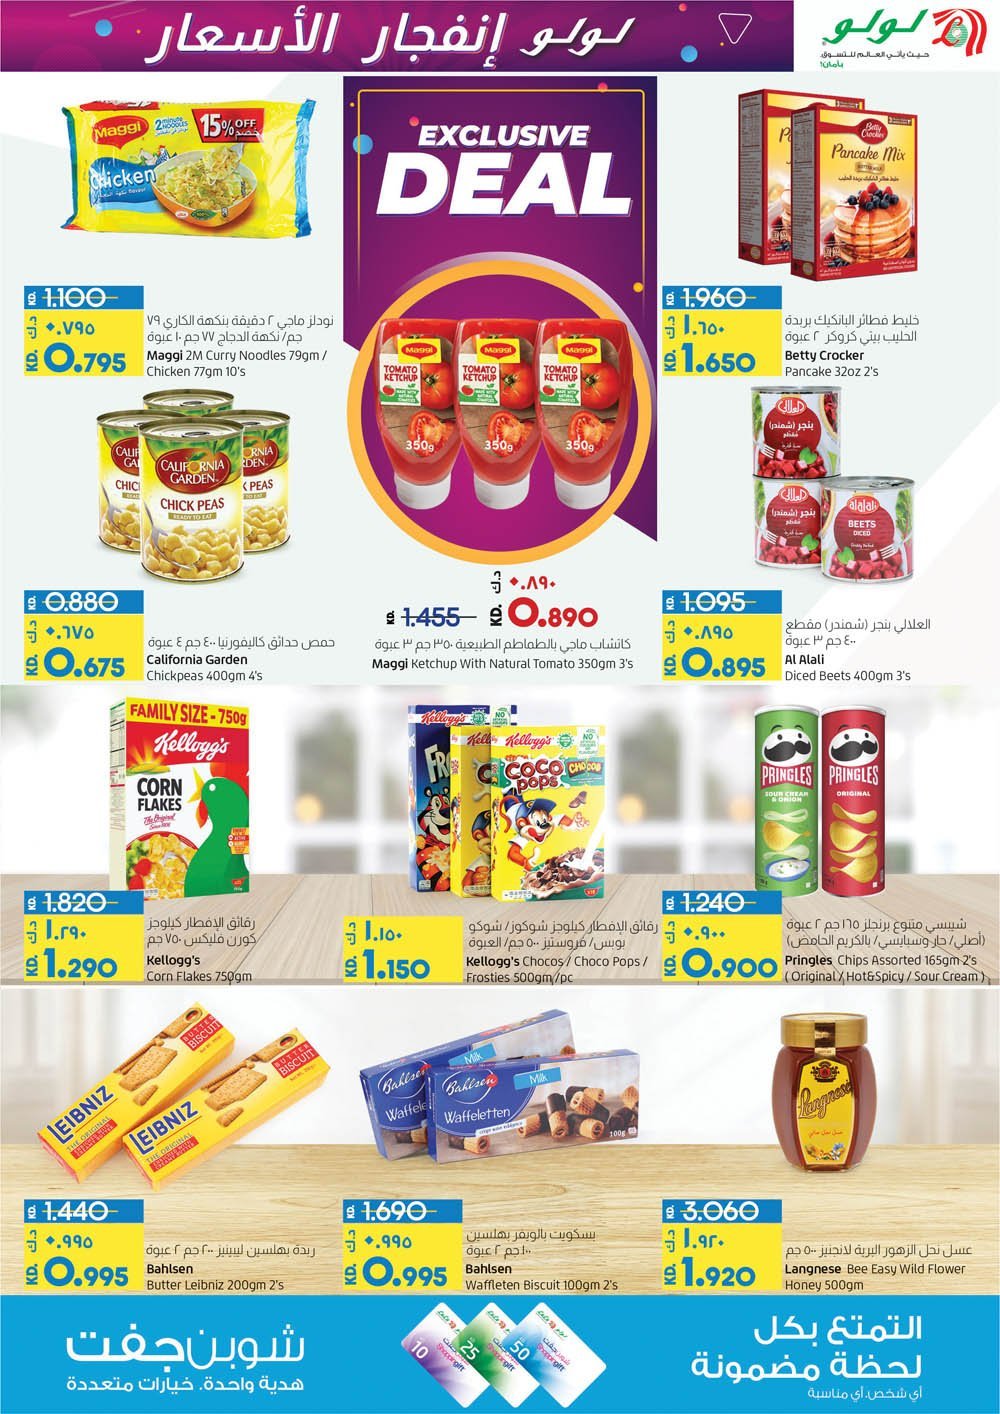 Lulu Hypermarket Price Blast starts till 24th May, iiQ8 offers 4